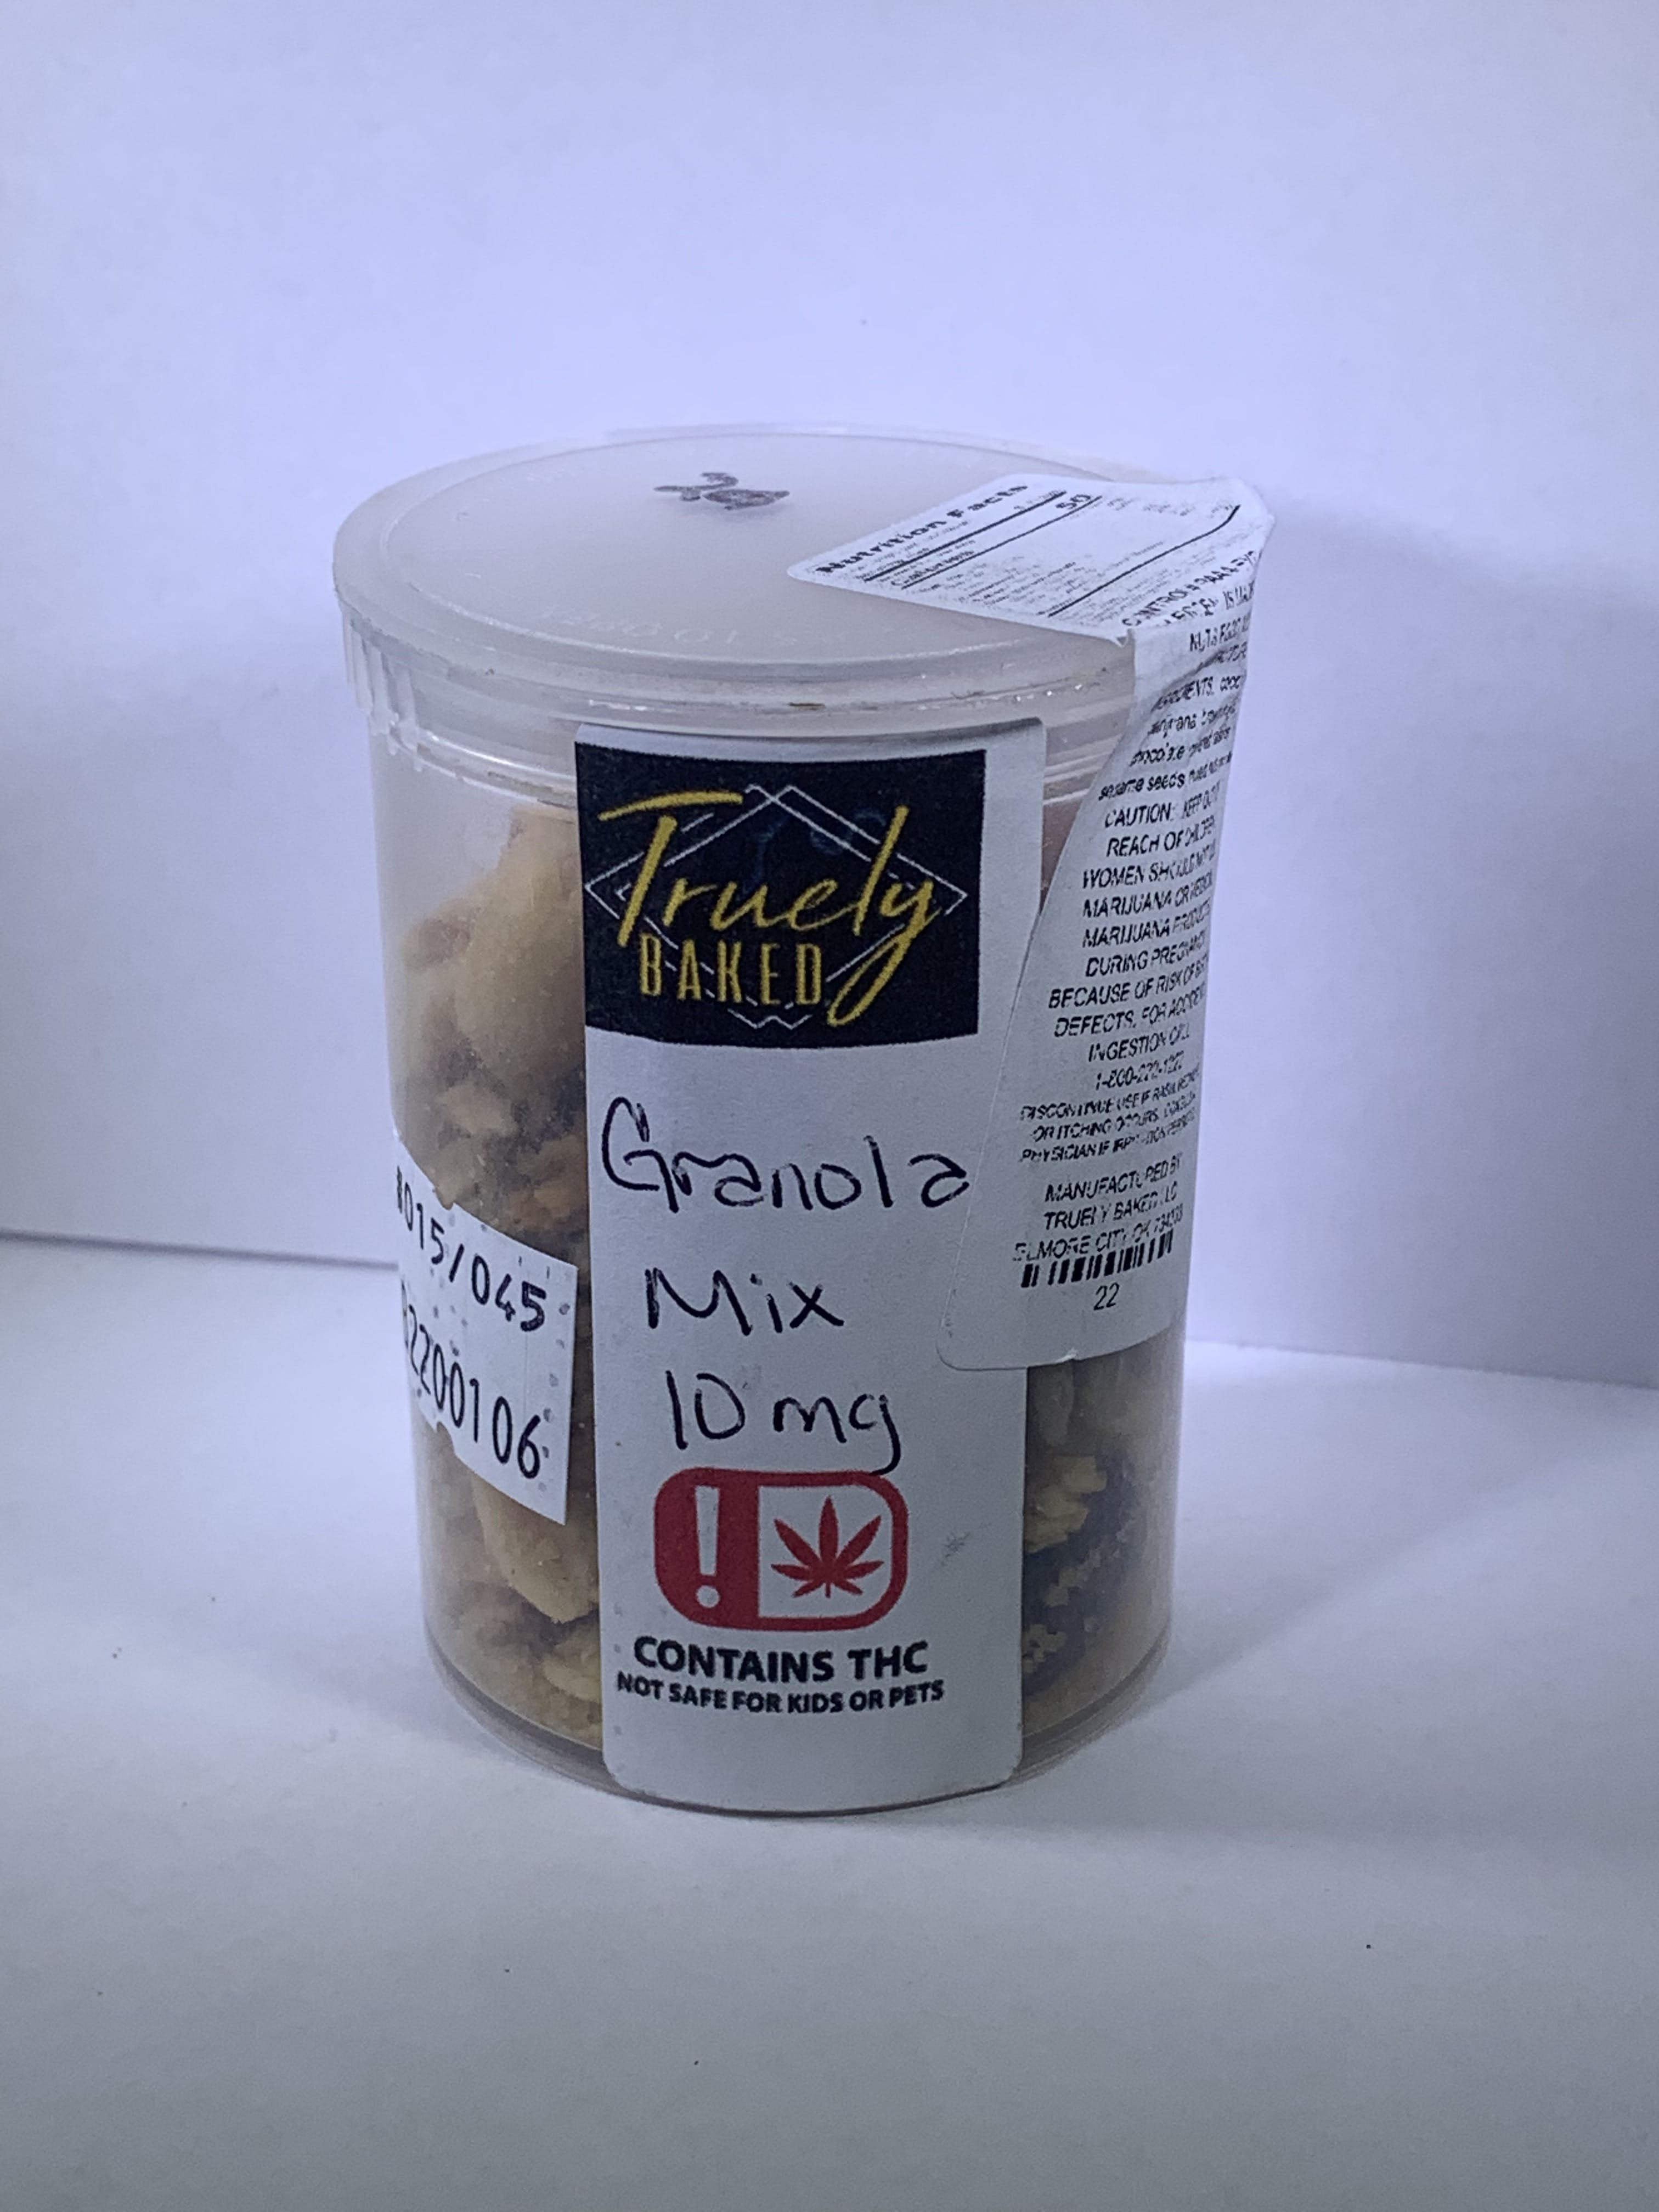 edible-granola-mix-10mg-truely-baked